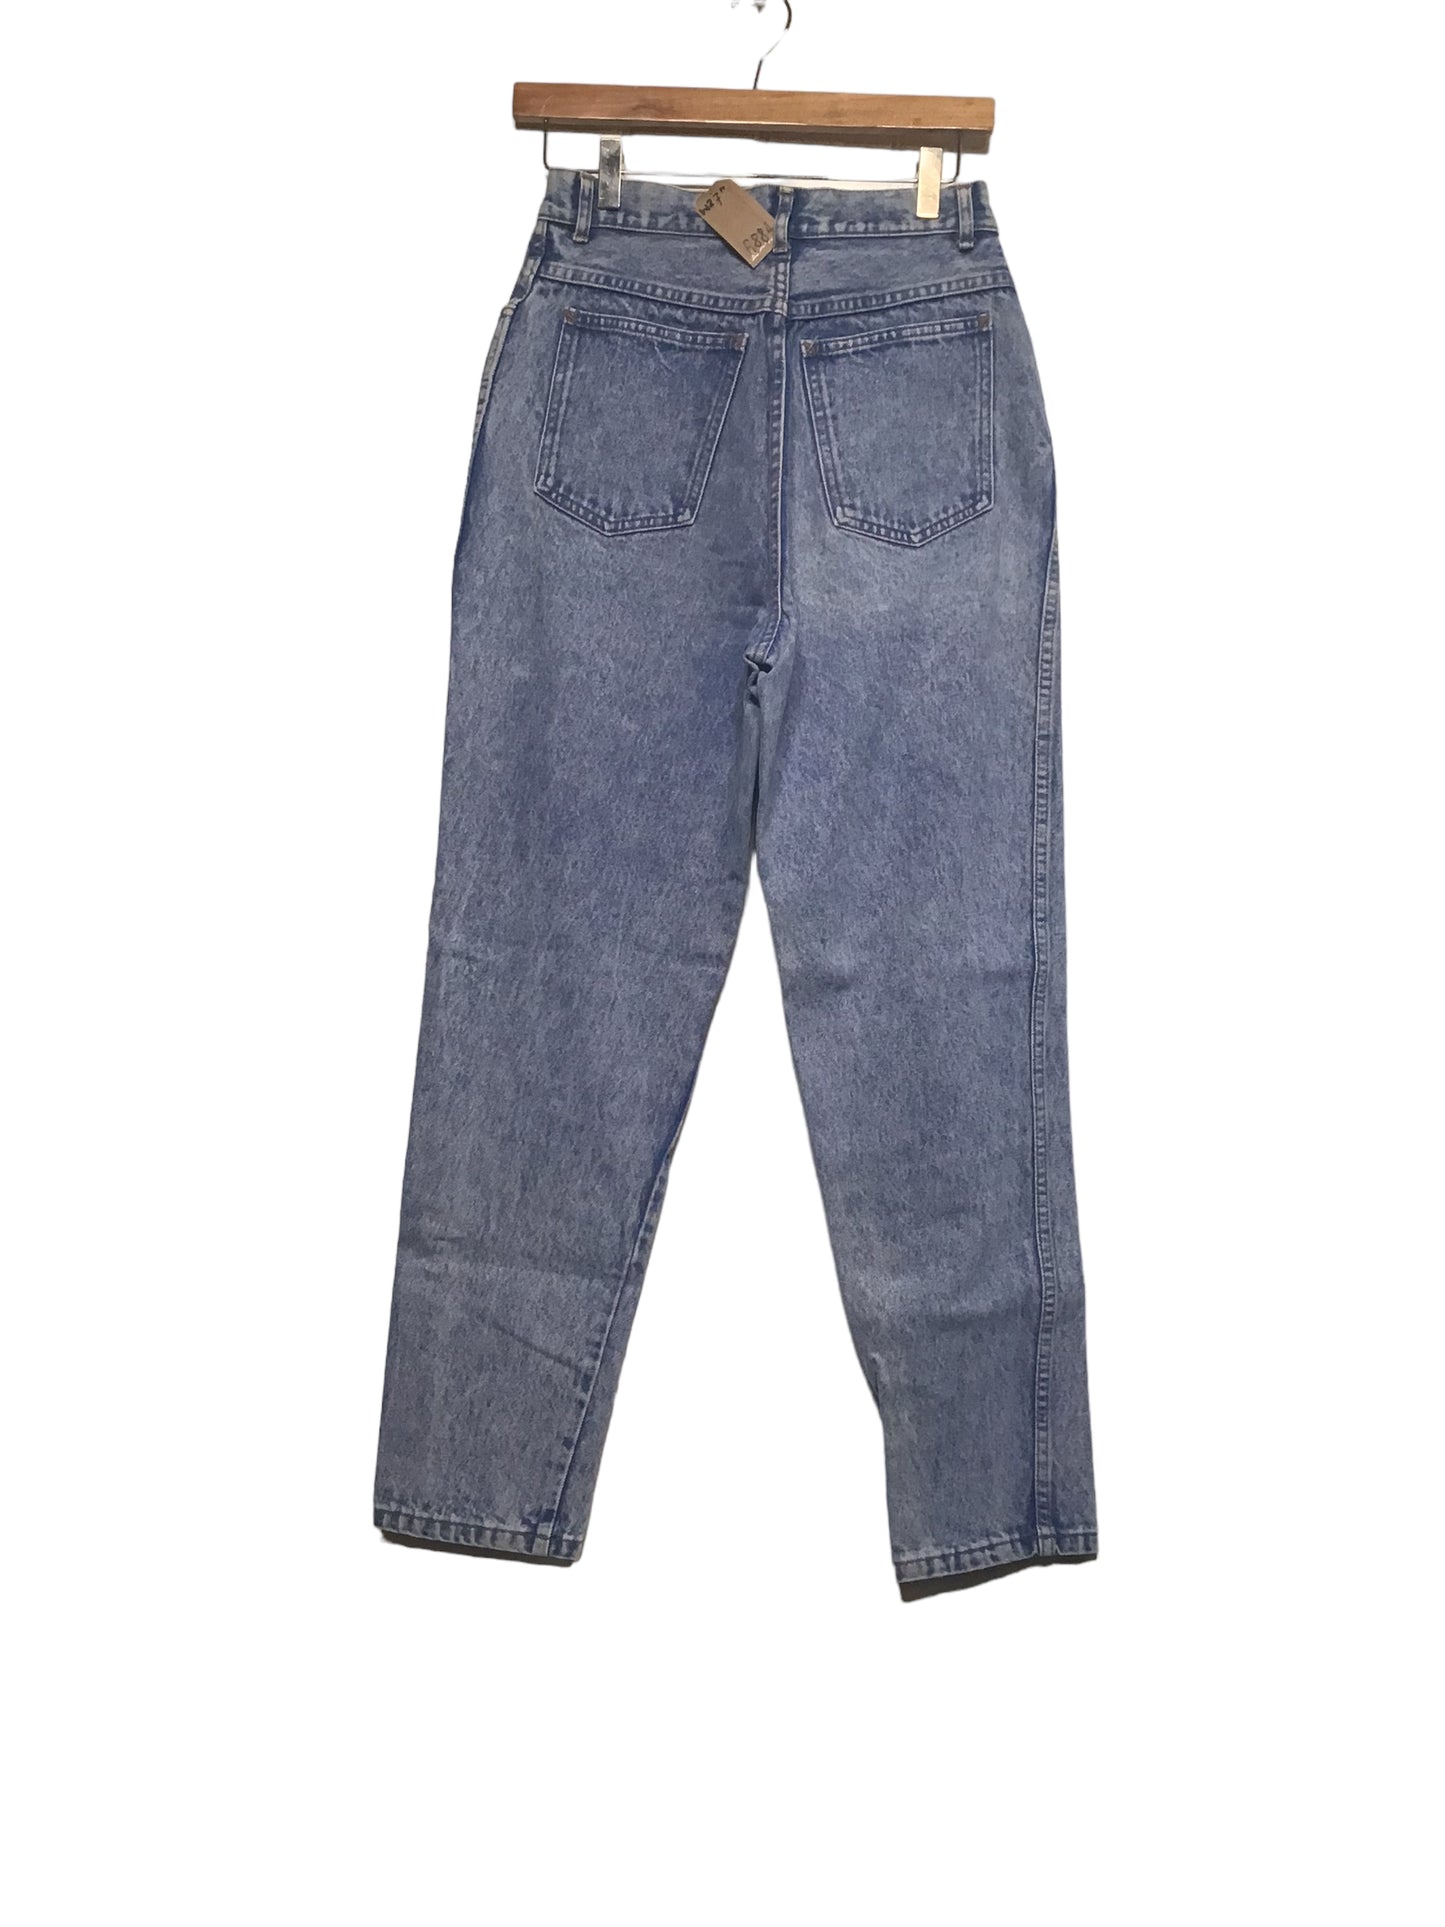 Rio Jeans (28x29)